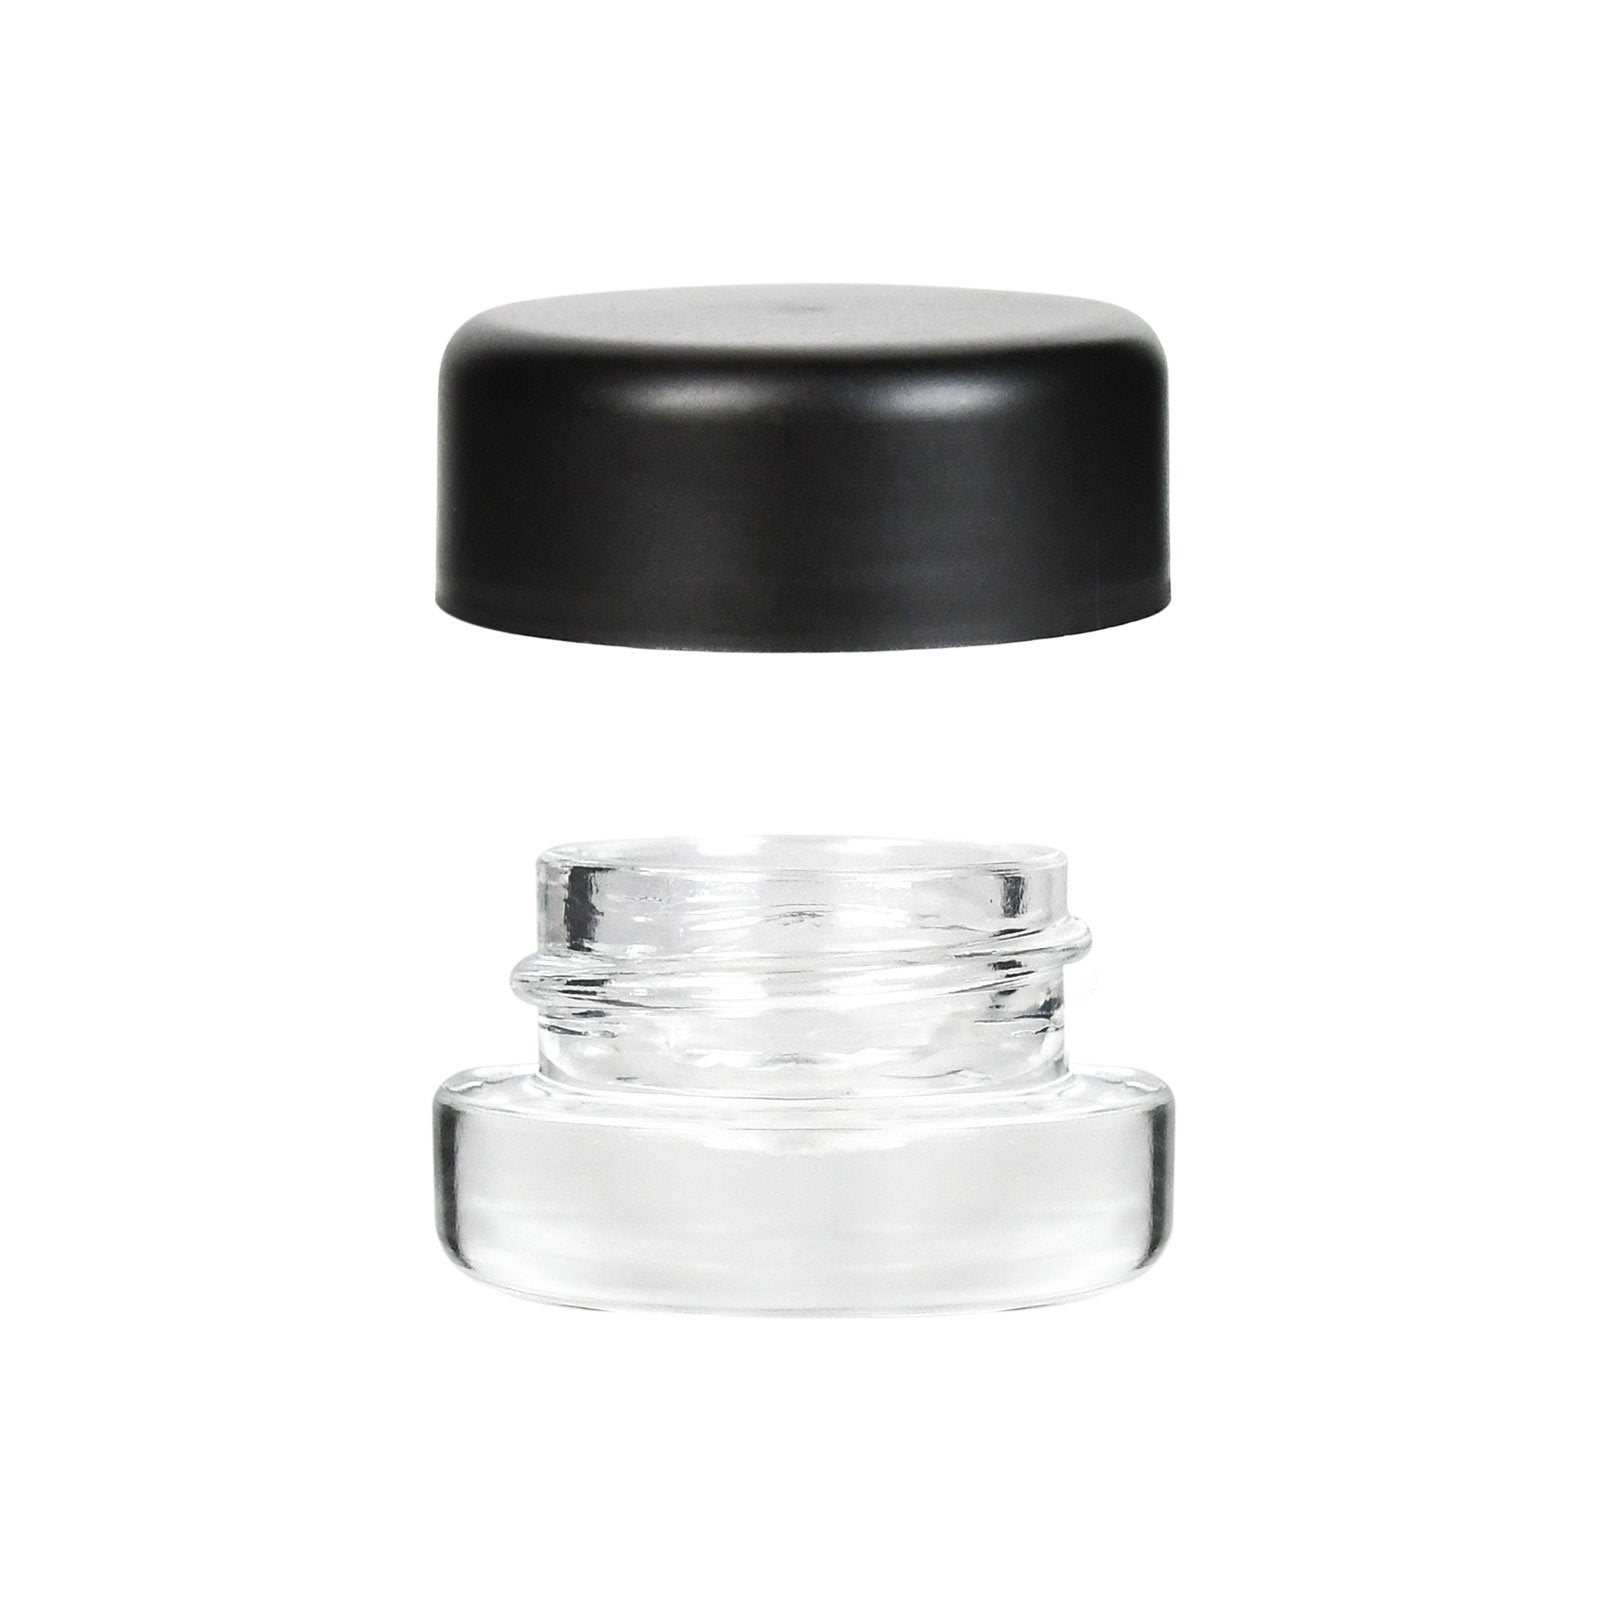 5ml Child Resistant Glass Jar With Black Cap - 1 Gram - 40 Count